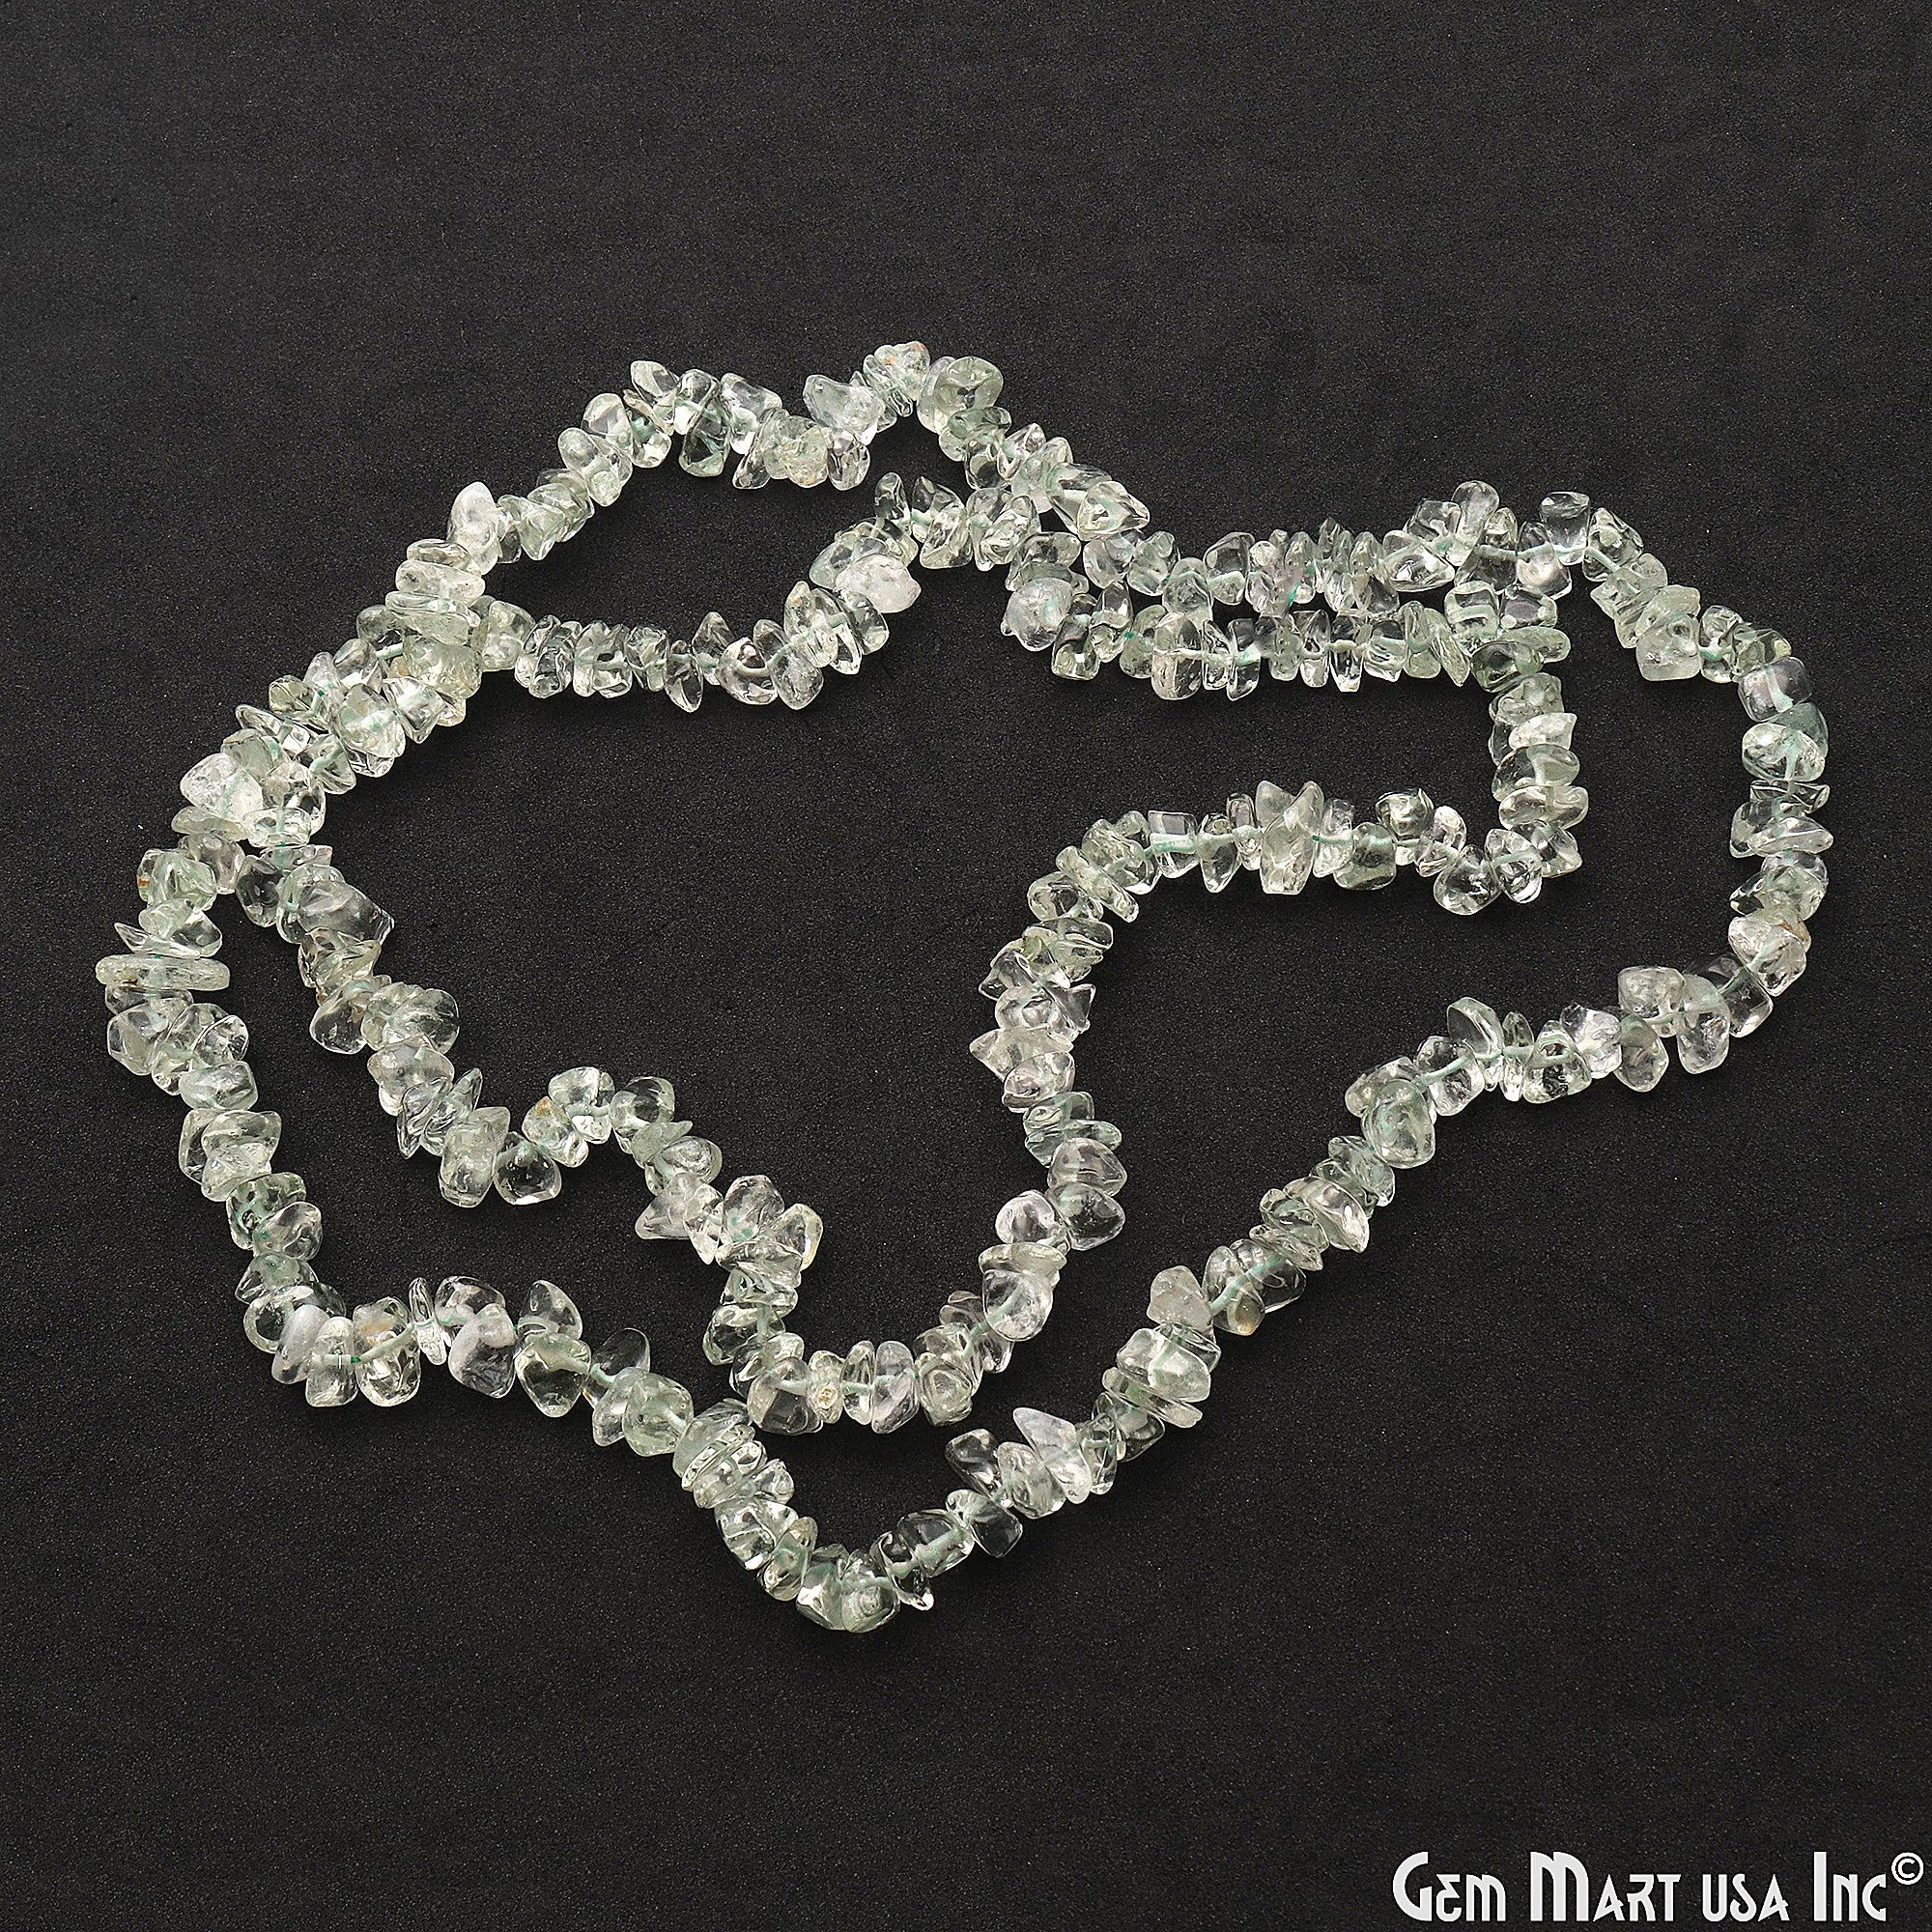 Green Amethyst Chip Free Form 7-10mm Nugget Beads Gemstone Strands 34"